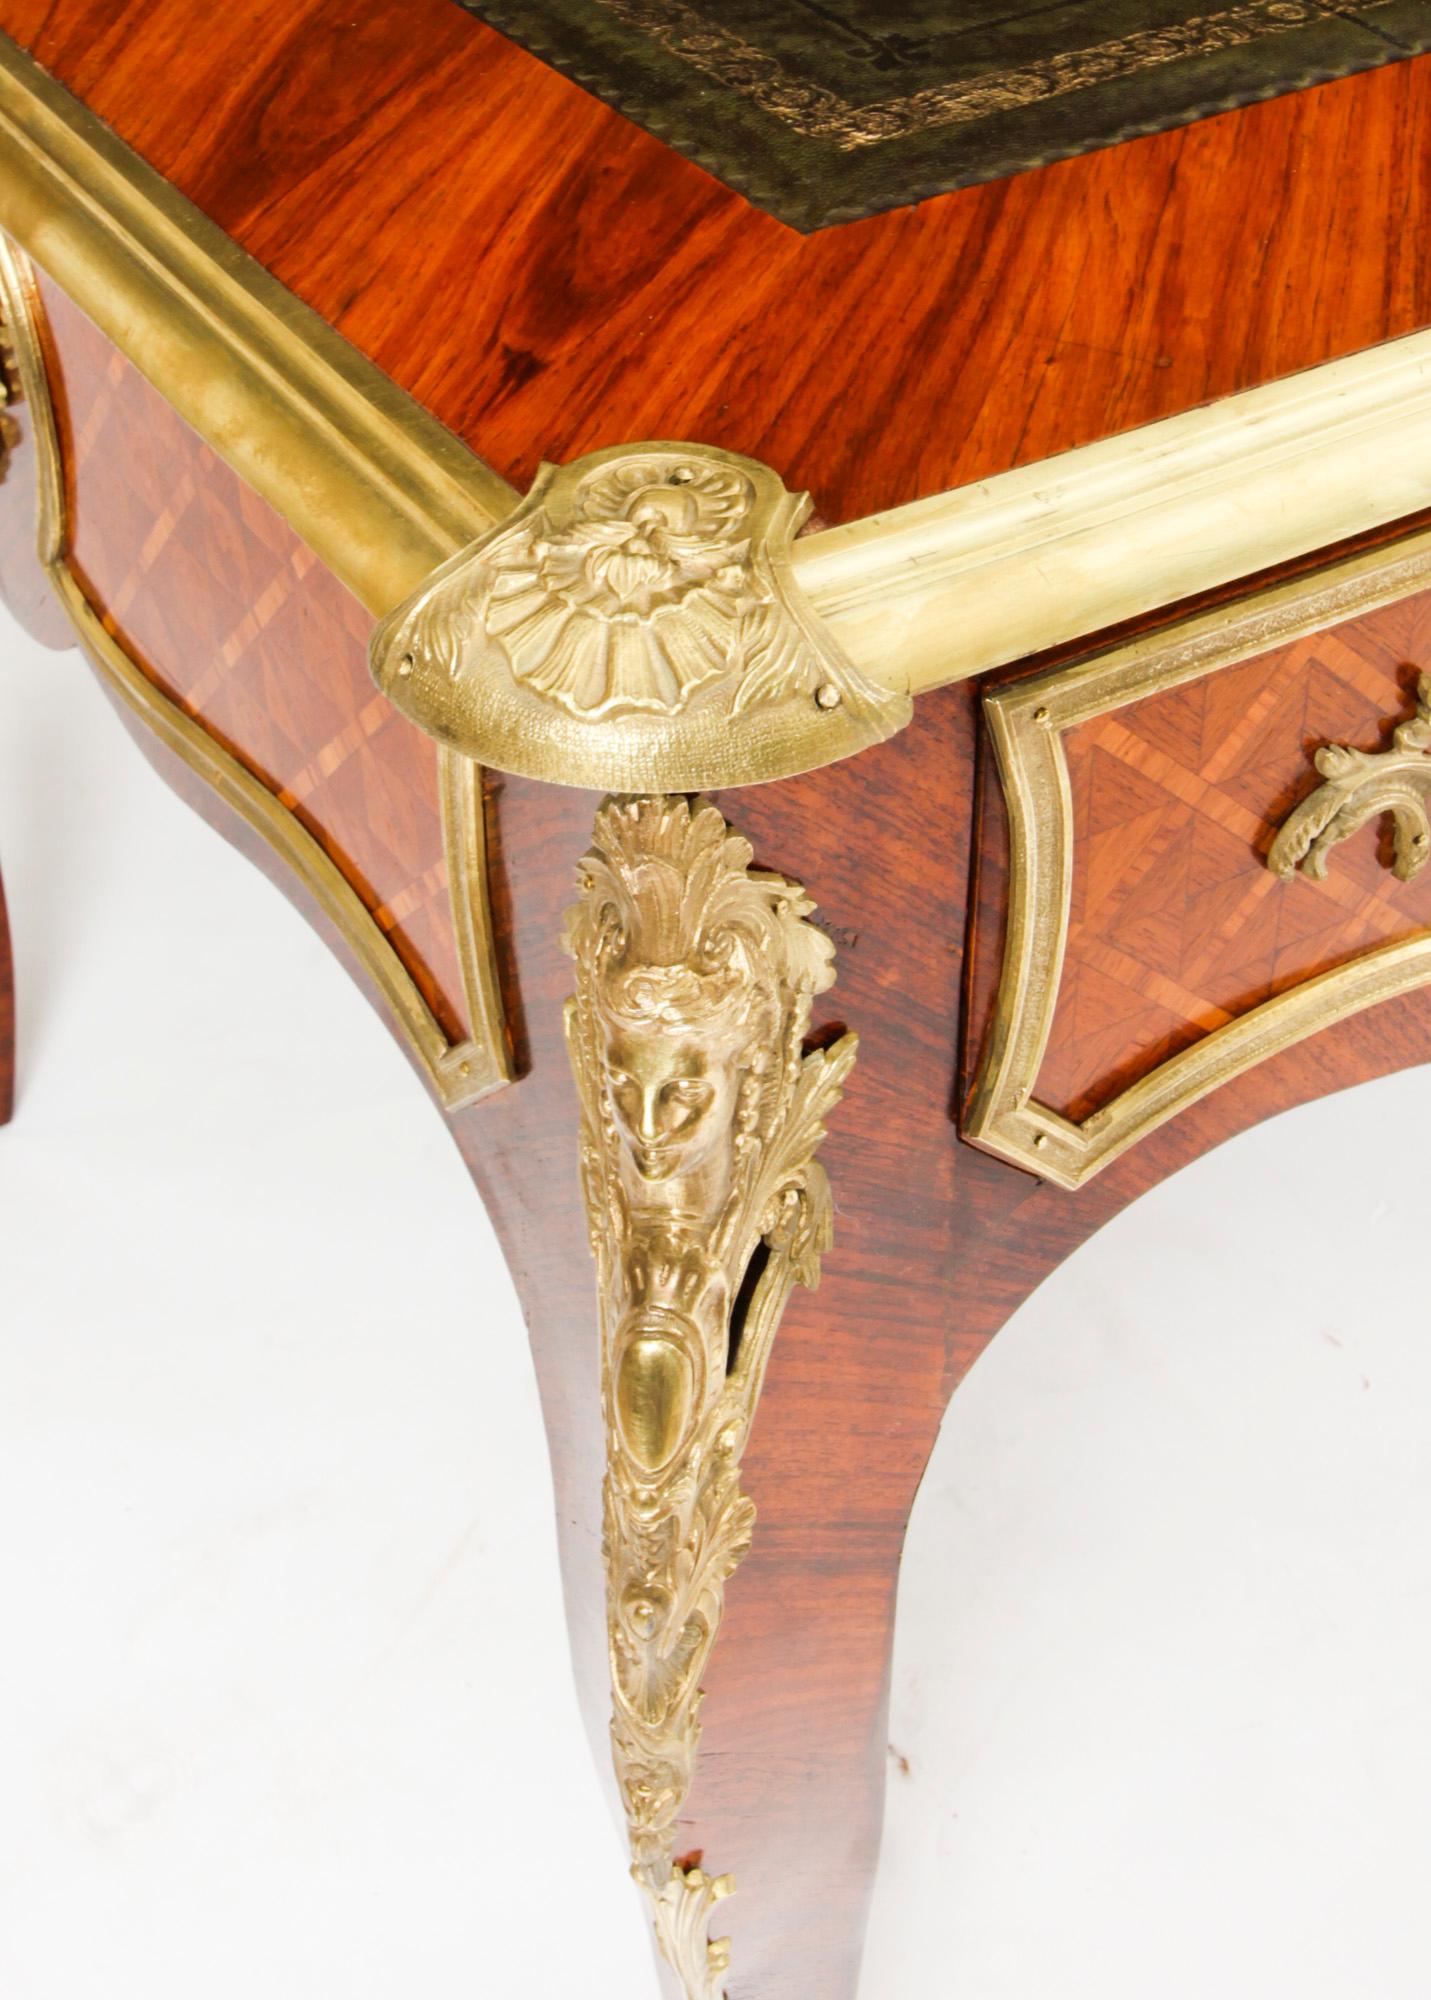 Antique Louis Revival Ormolu Mounted Bureau Plat Desk 19th C In Good Condition For Sale In London, GB